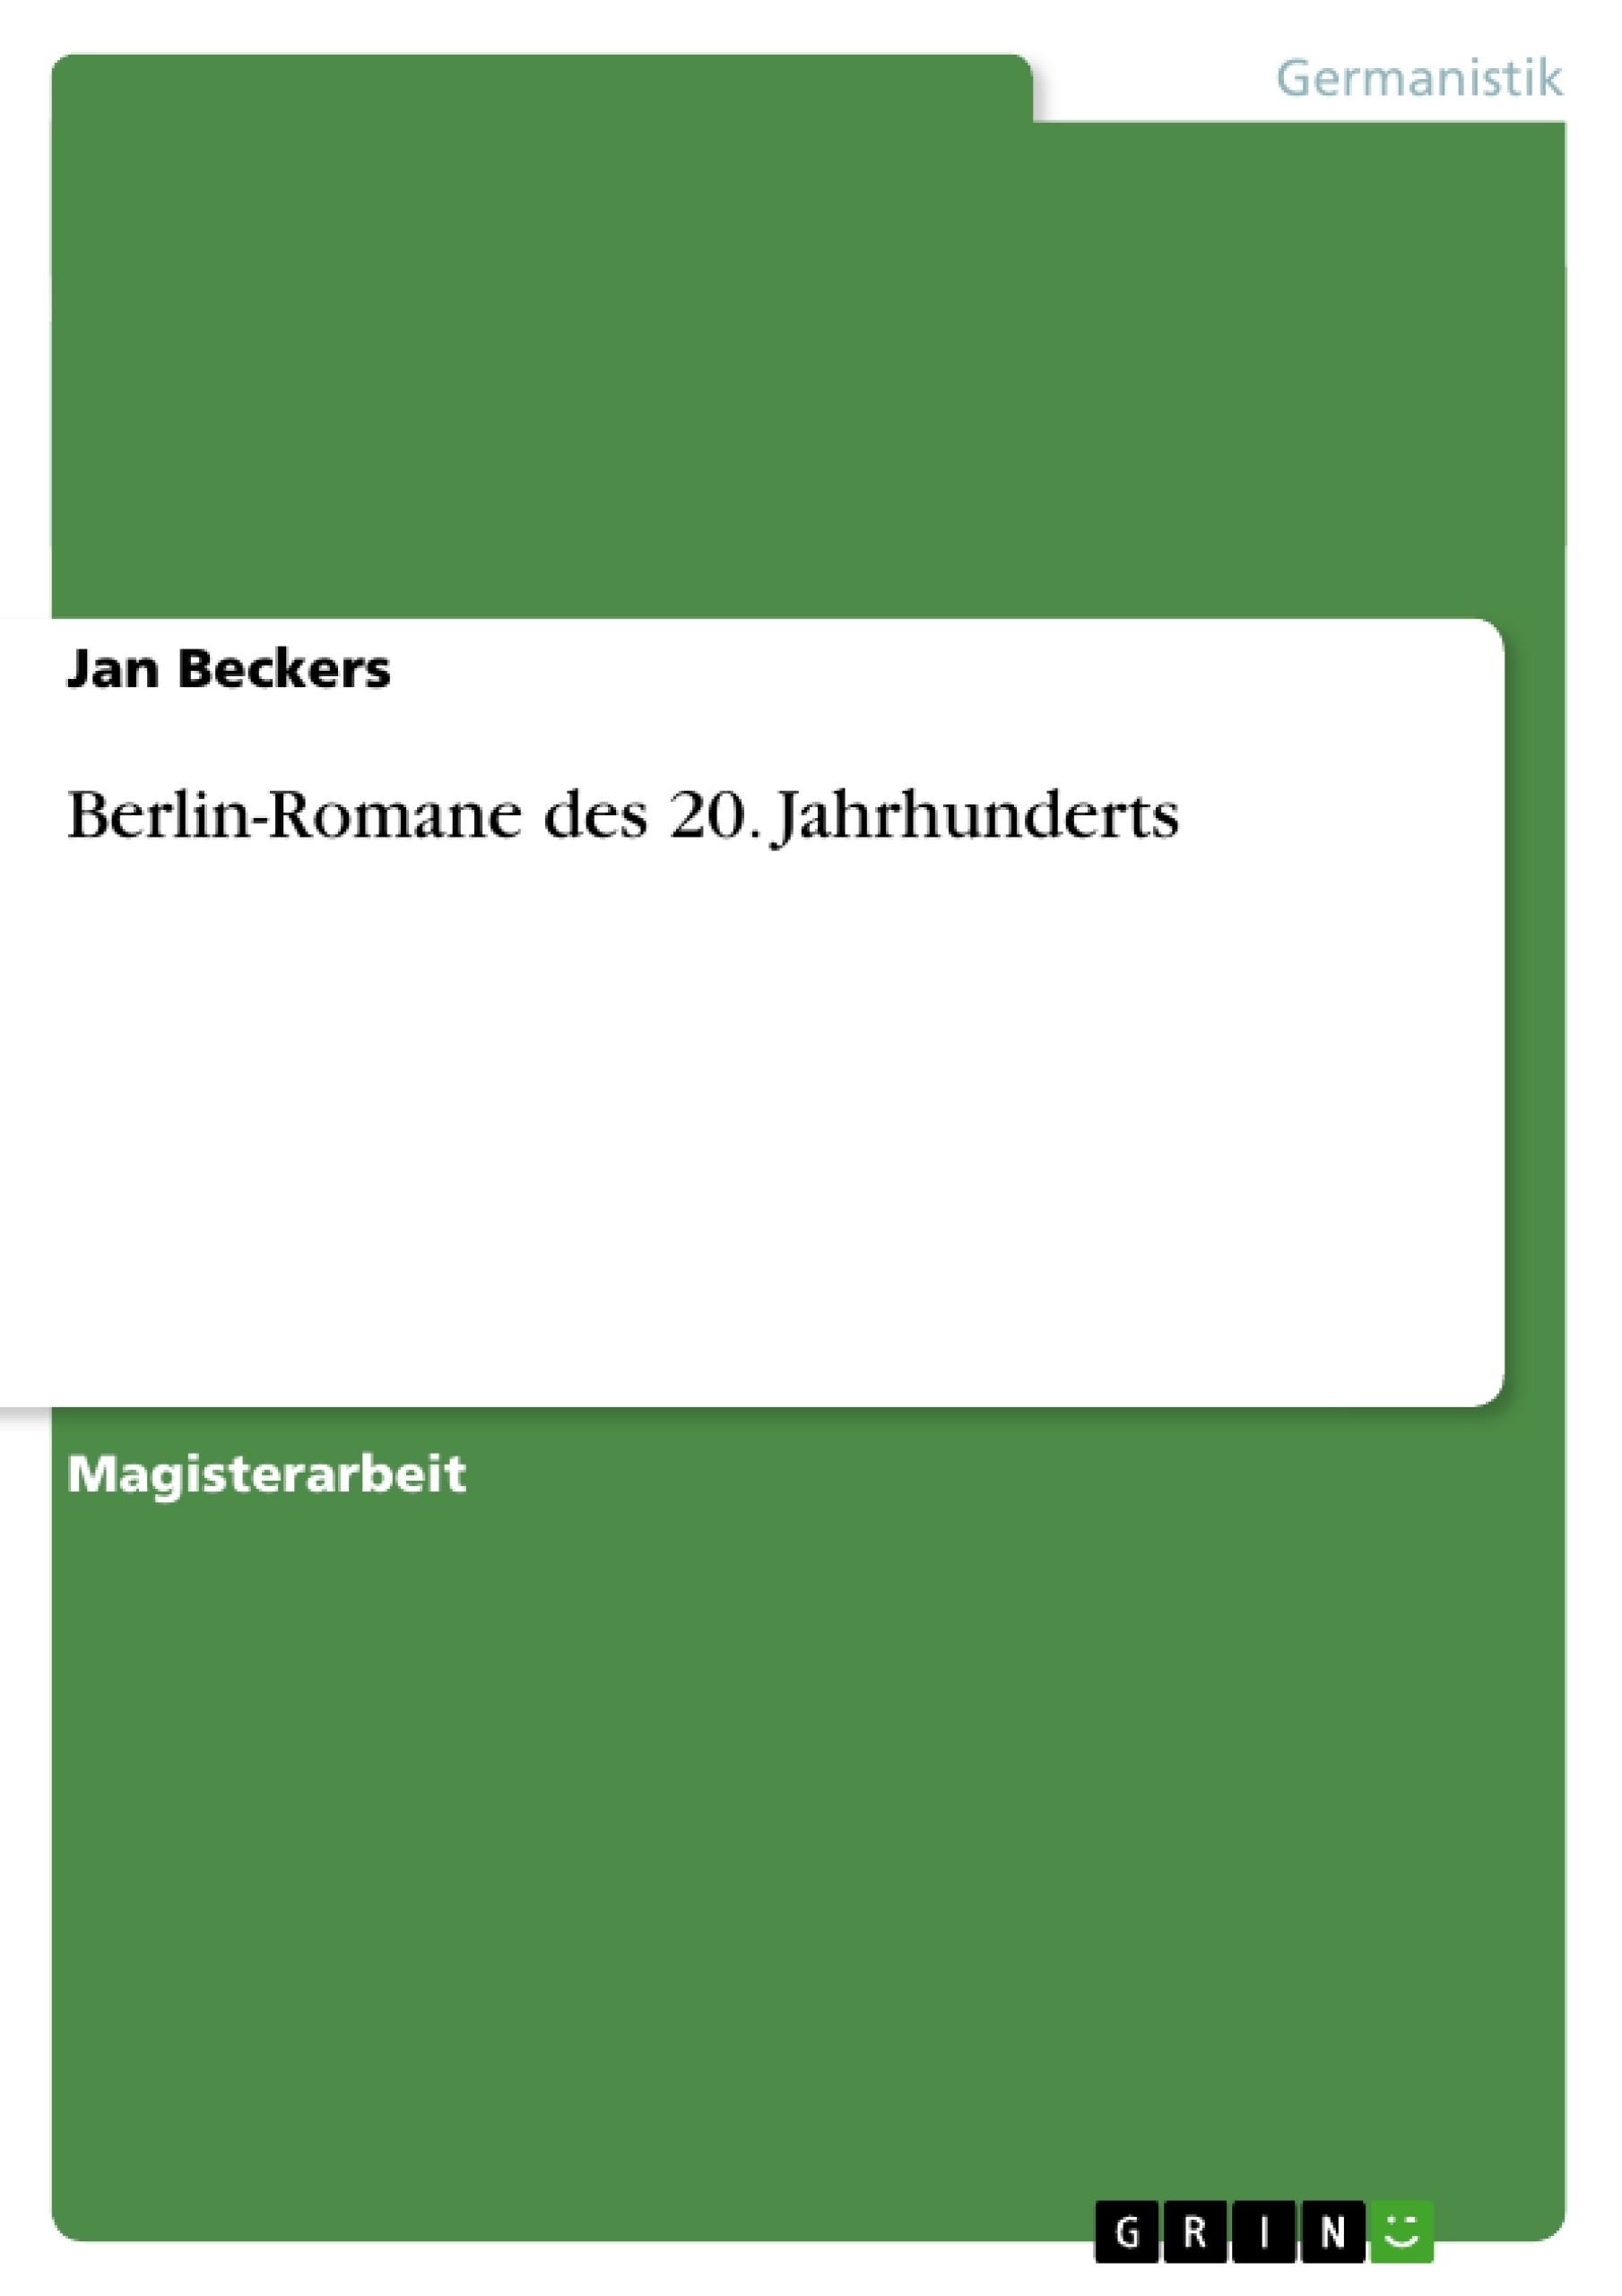 Título: Berlin-Romane des 20. Jahrhunderts